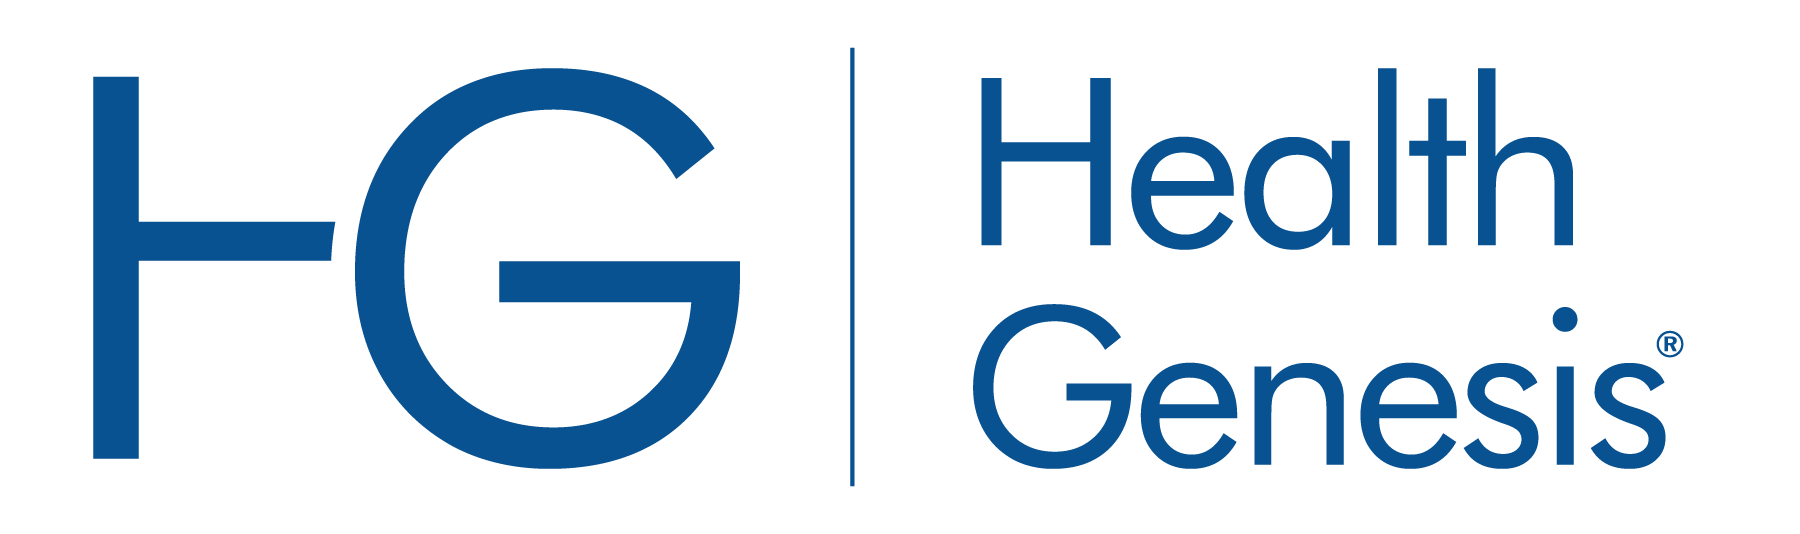 Health Genesis Corporation